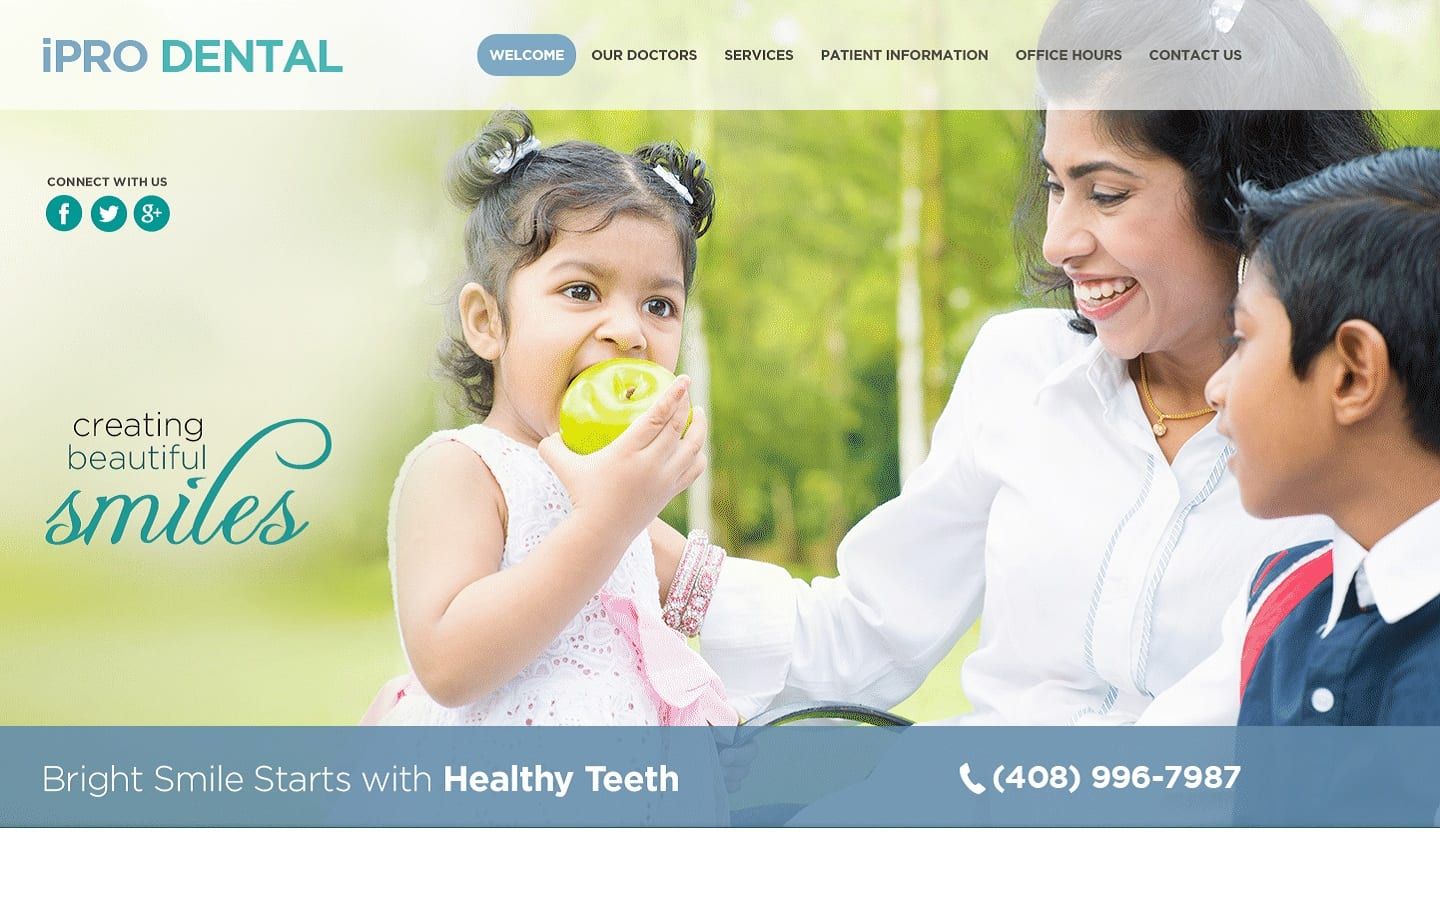 Ipro Dental Website Screenshot1